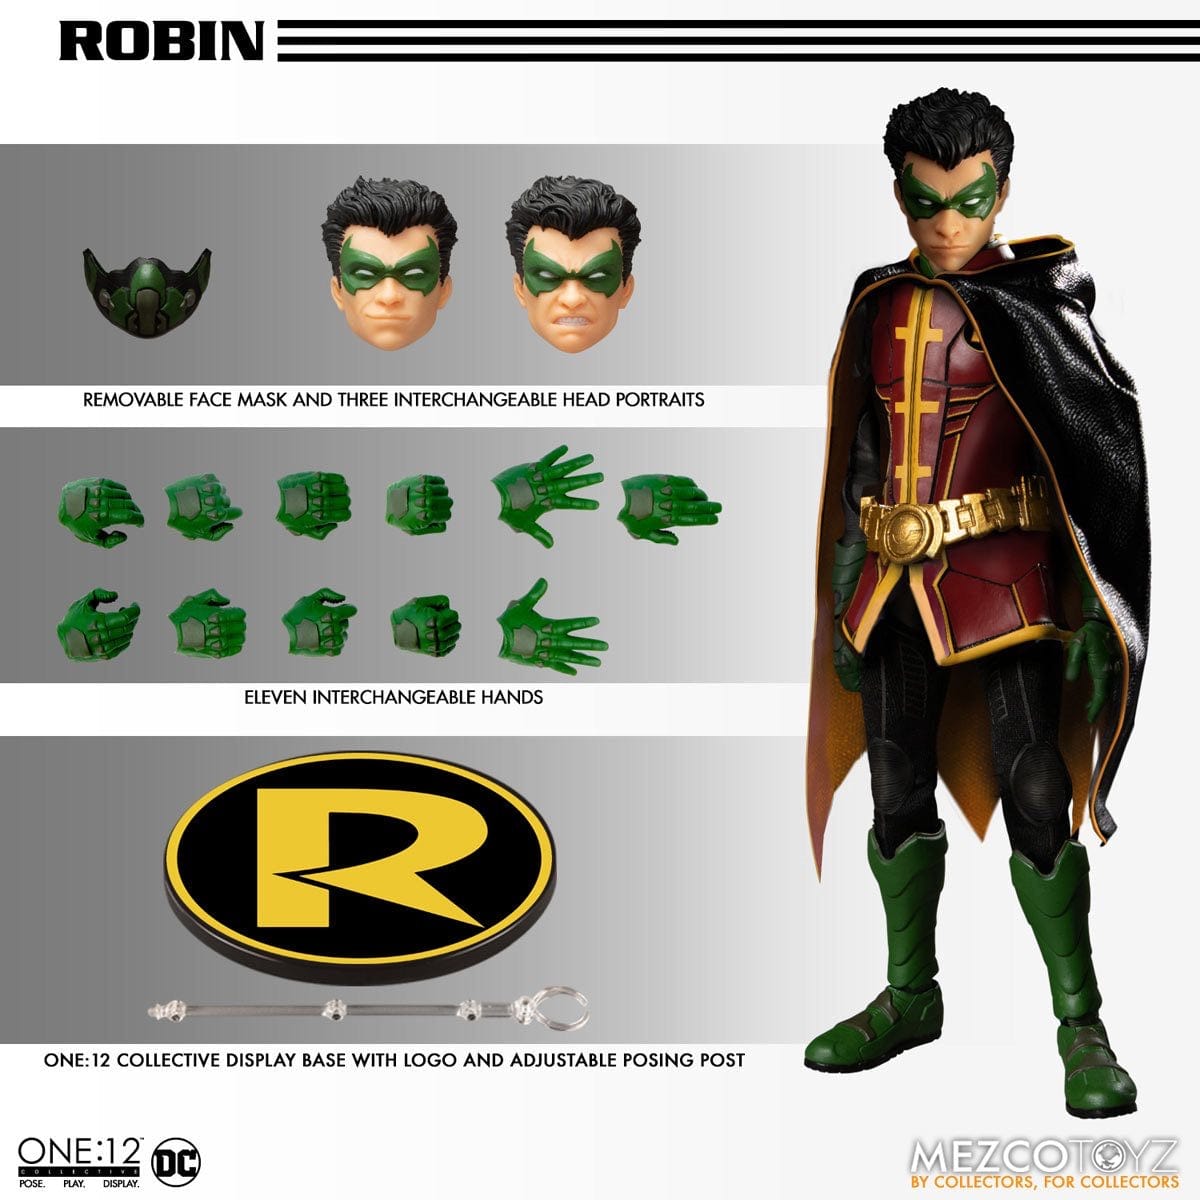 One:12 Collective Figures - DC Comics - Robin (Damian Wayne)